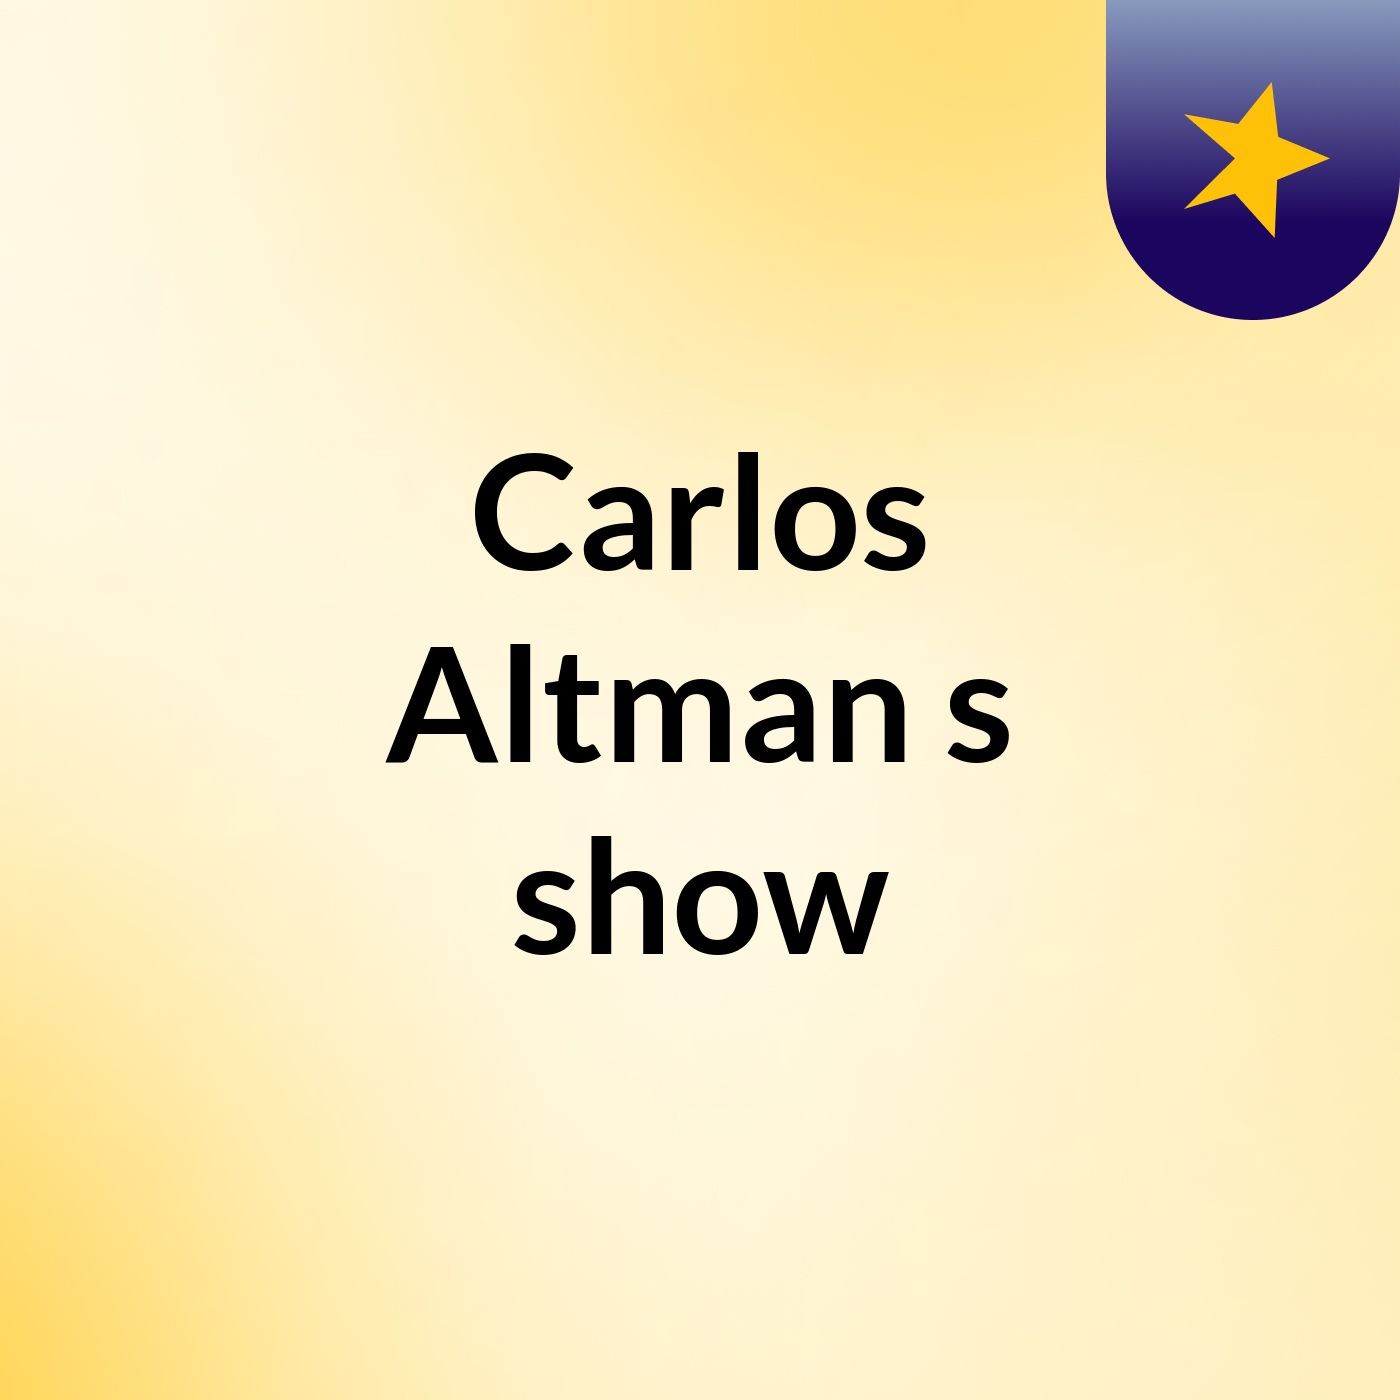 Carlos Altman's show